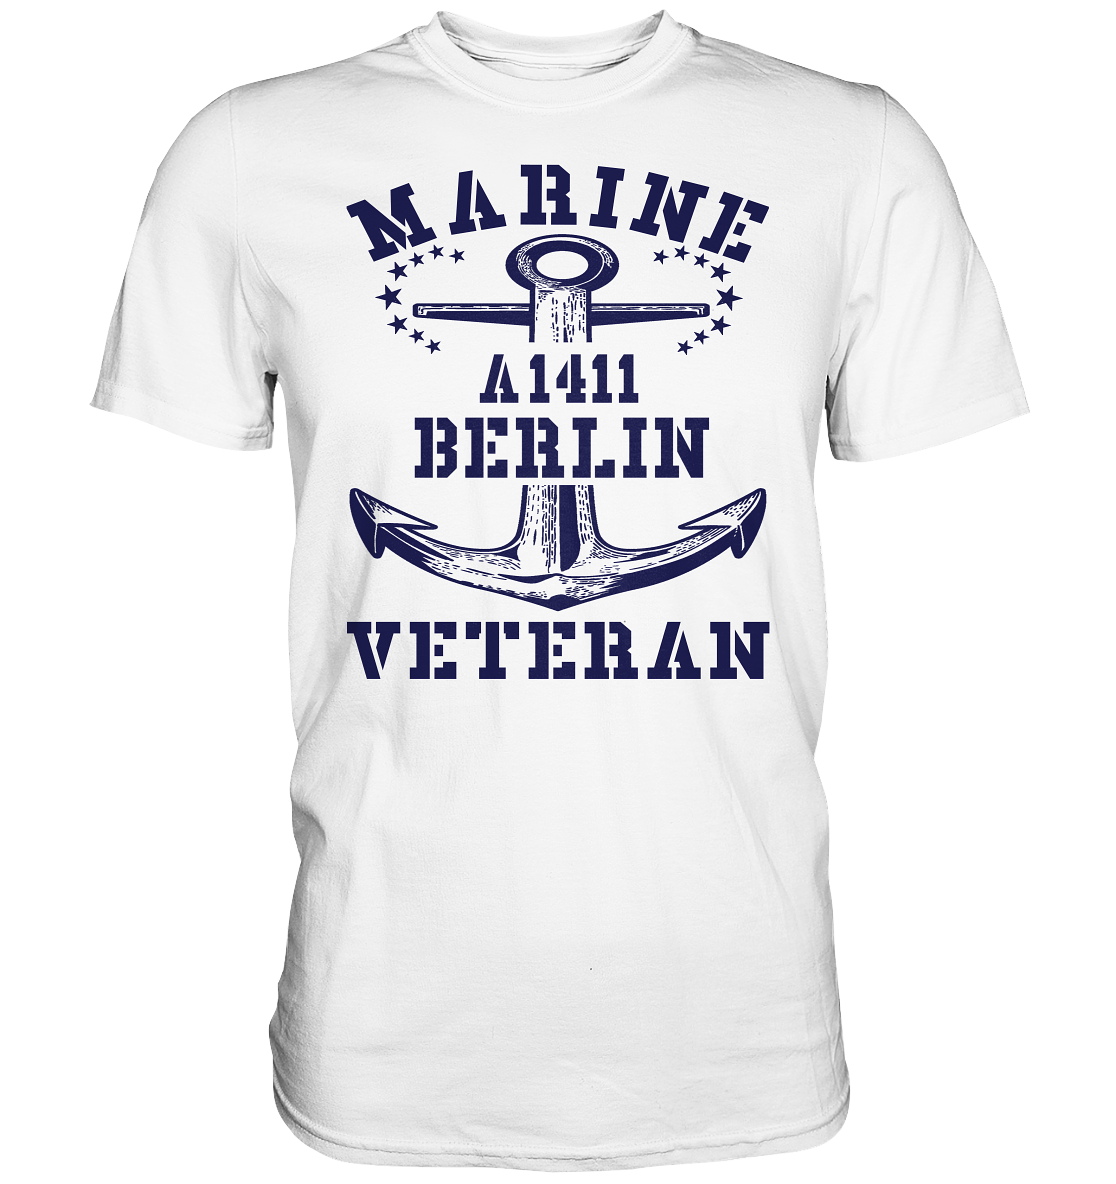 EGV A1411 BERLIN Marine Veteran - Premium Shirt